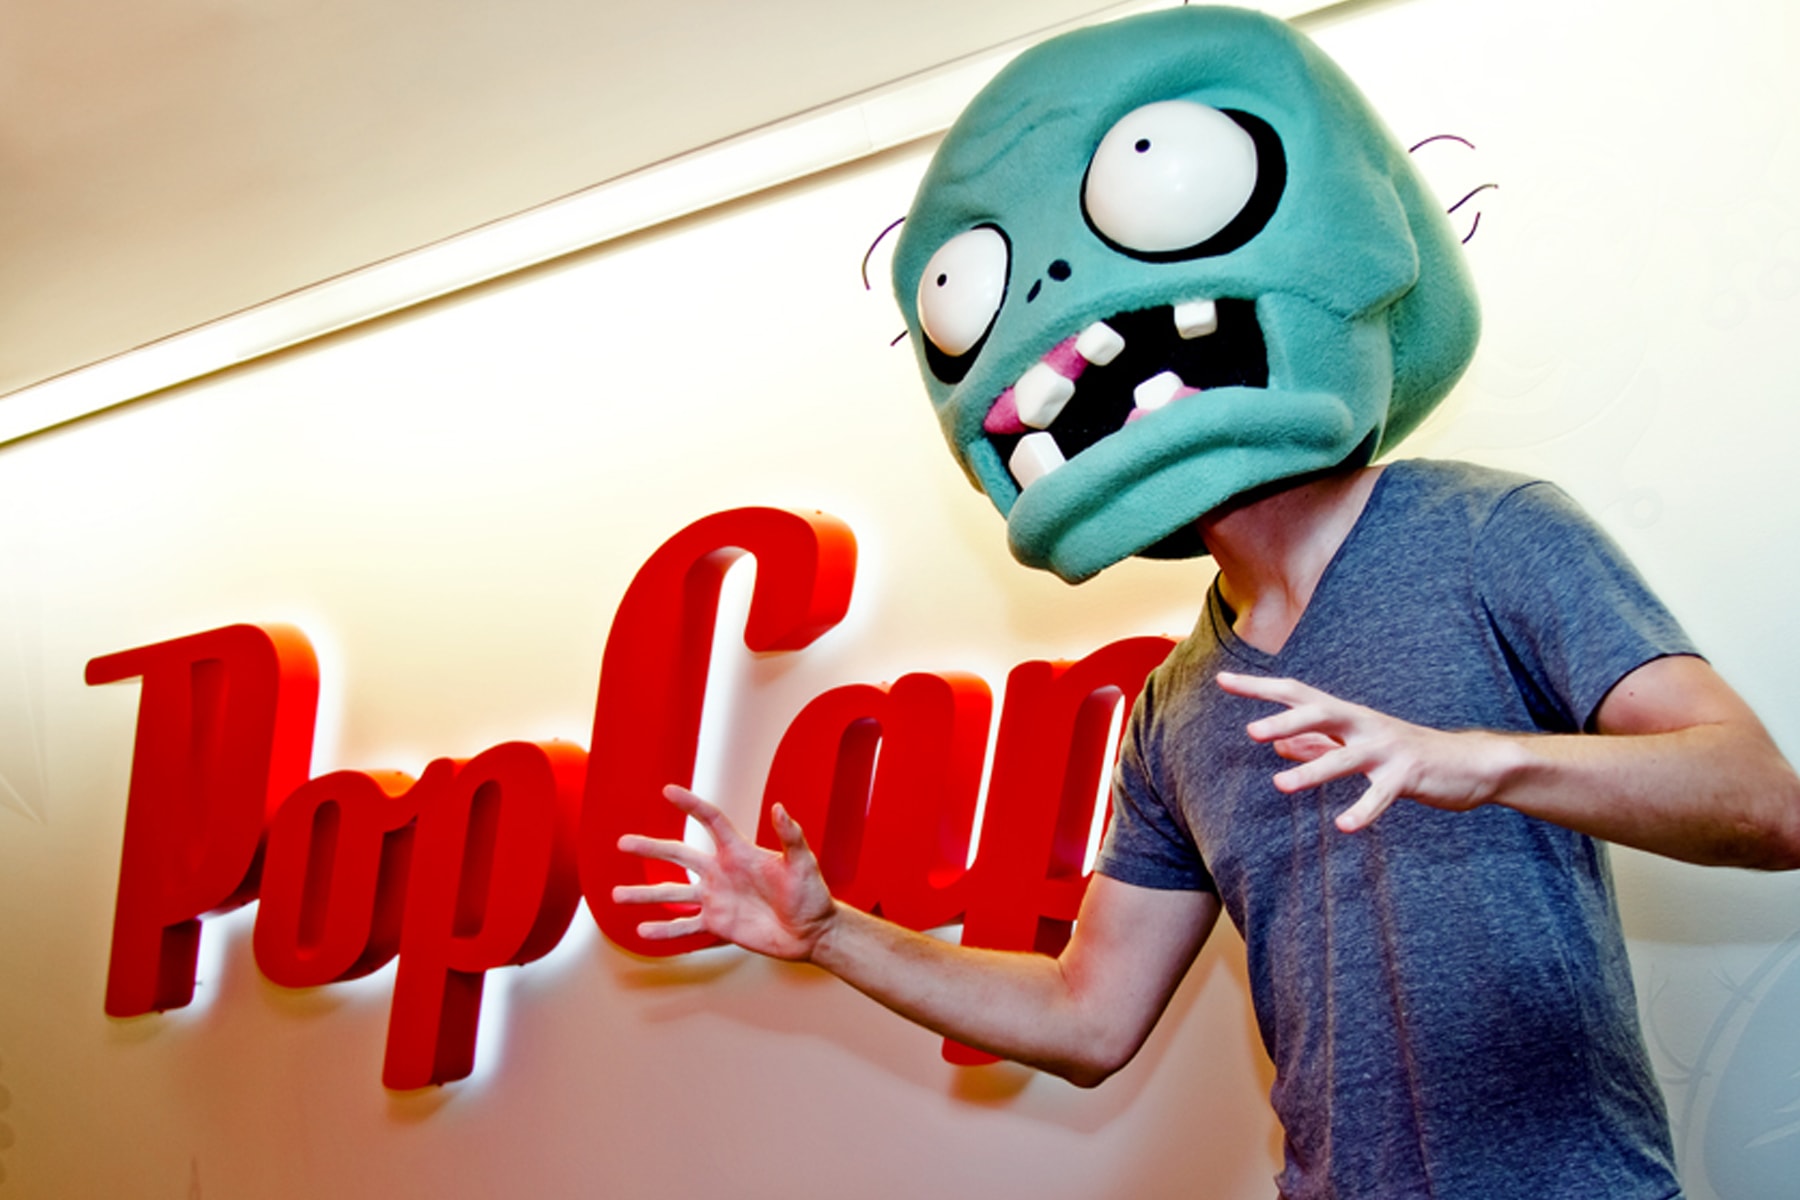 Mark Barrett wearing the zombie mascot's head in front of a lit, wall-mounted PopCap logo